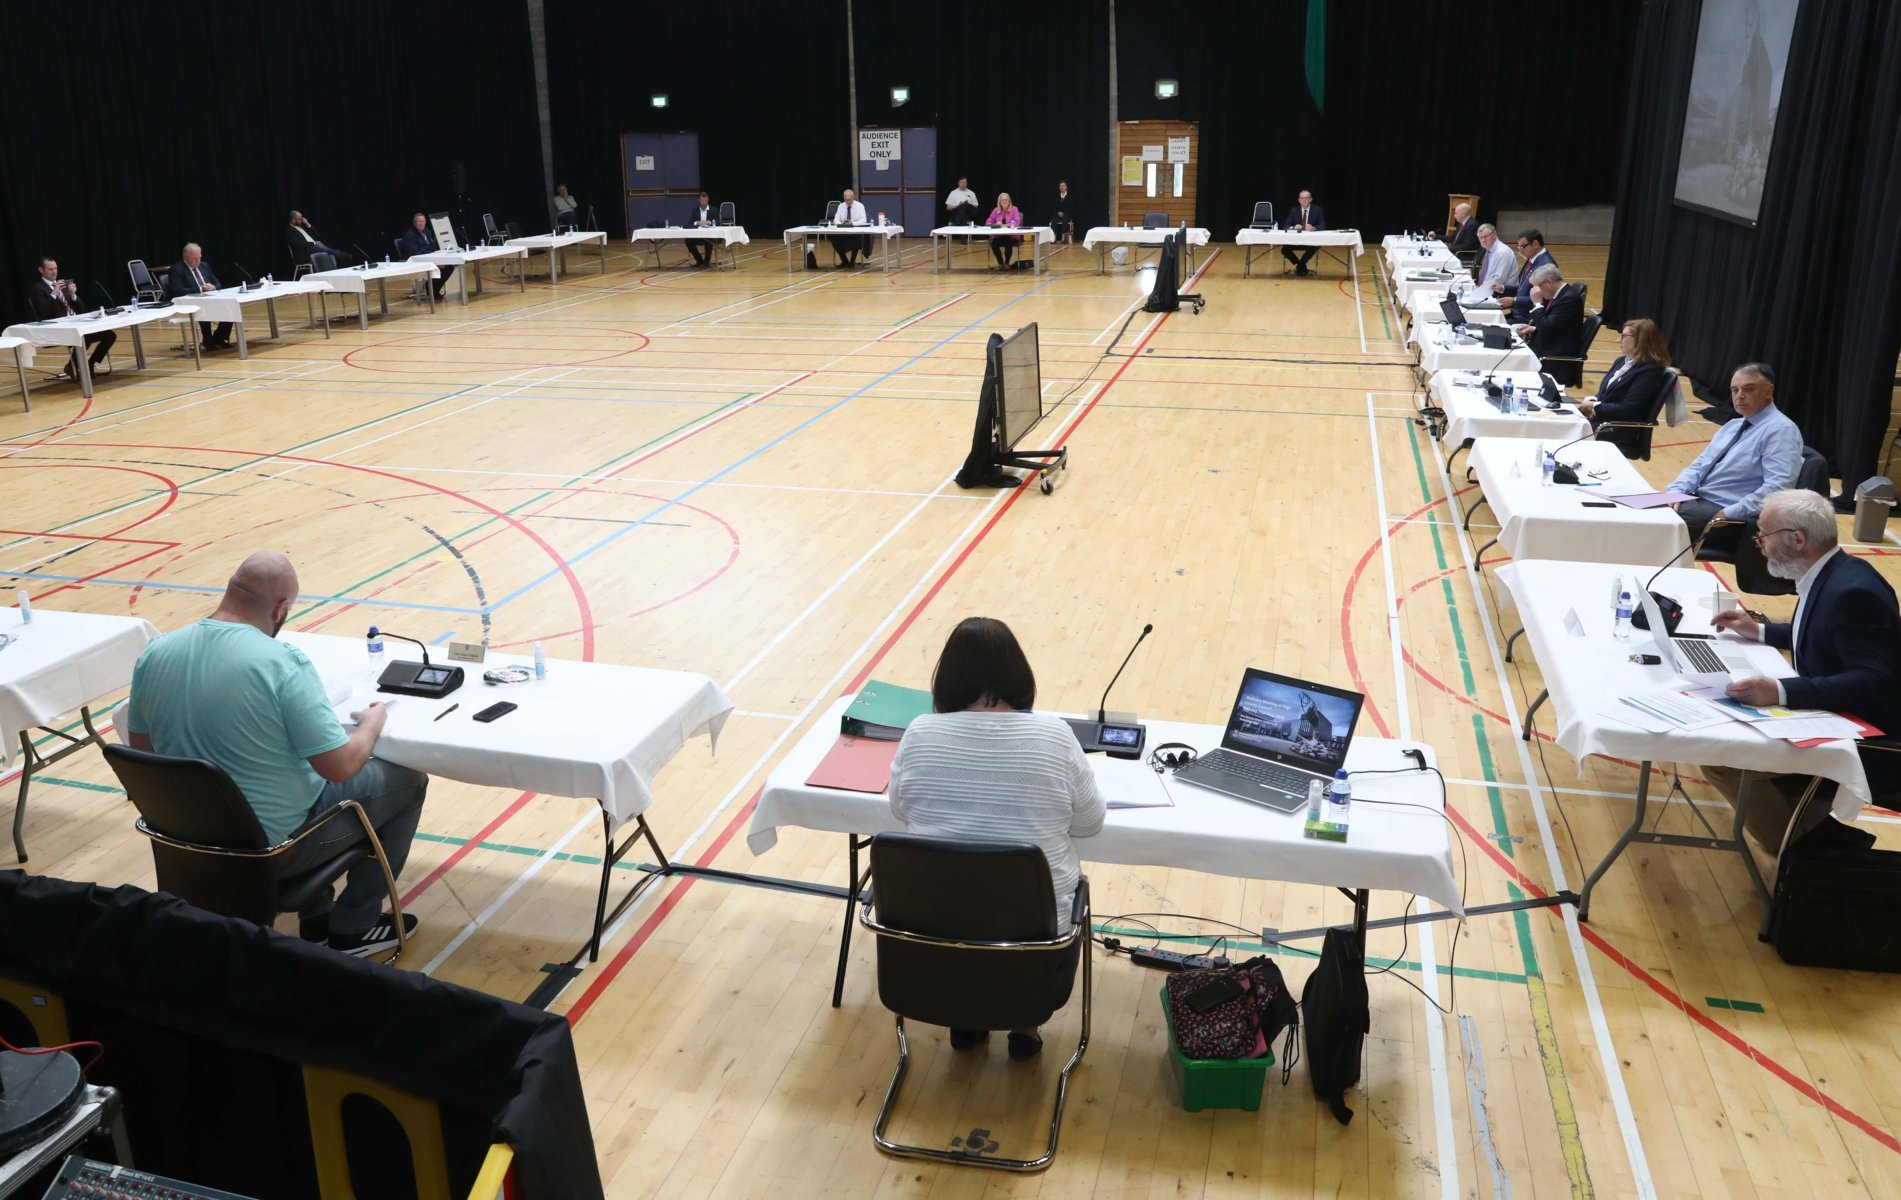 Council meeting held in Knocknarea Arena Photo 1